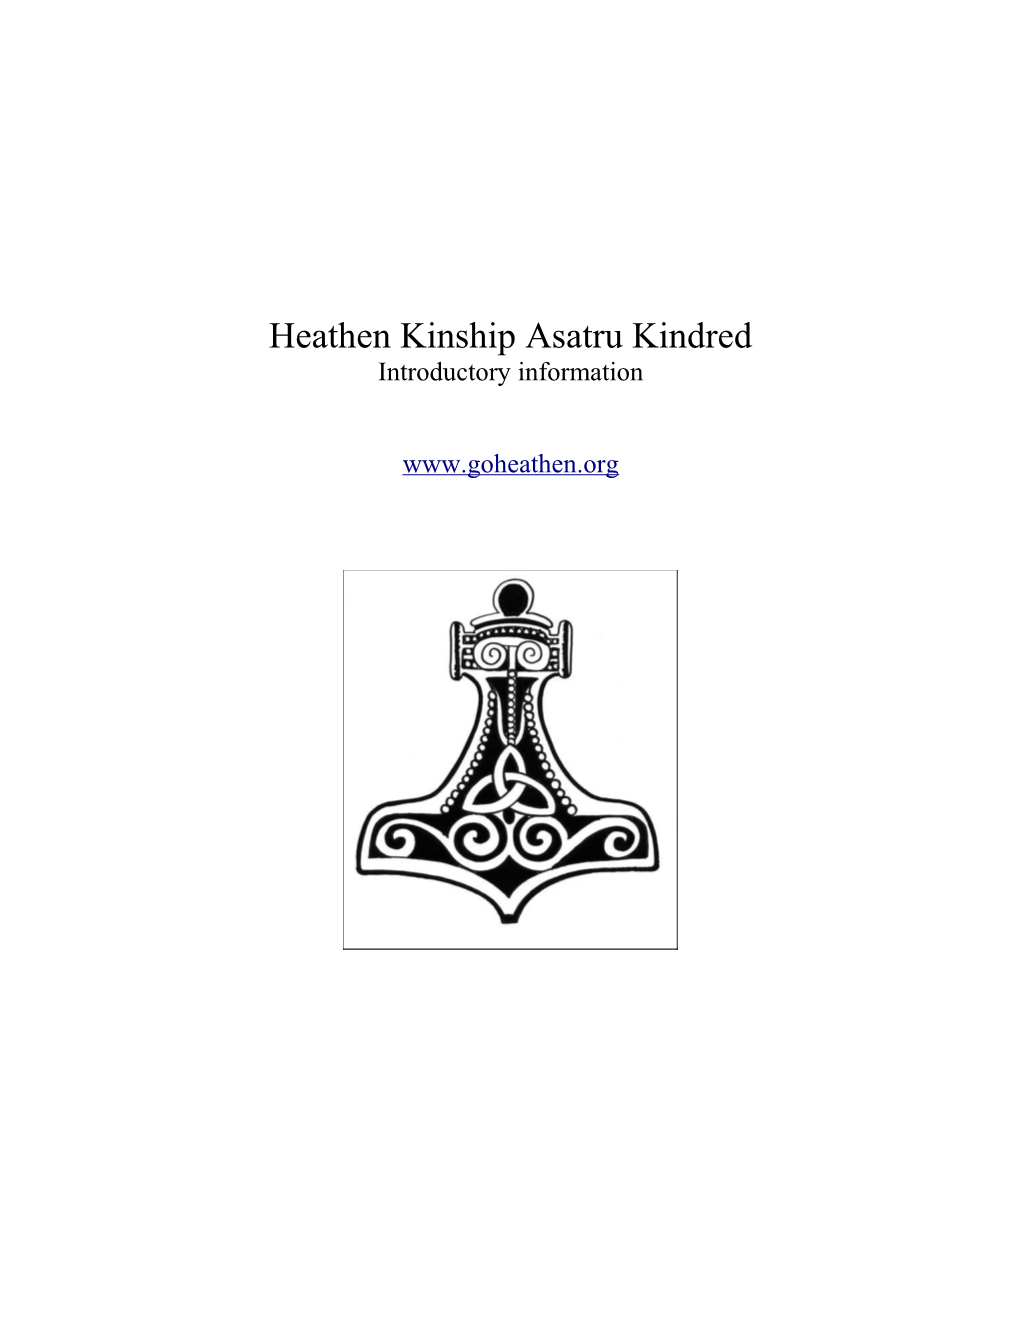 Heathen Kinship Asatru Kindred Introductory Information